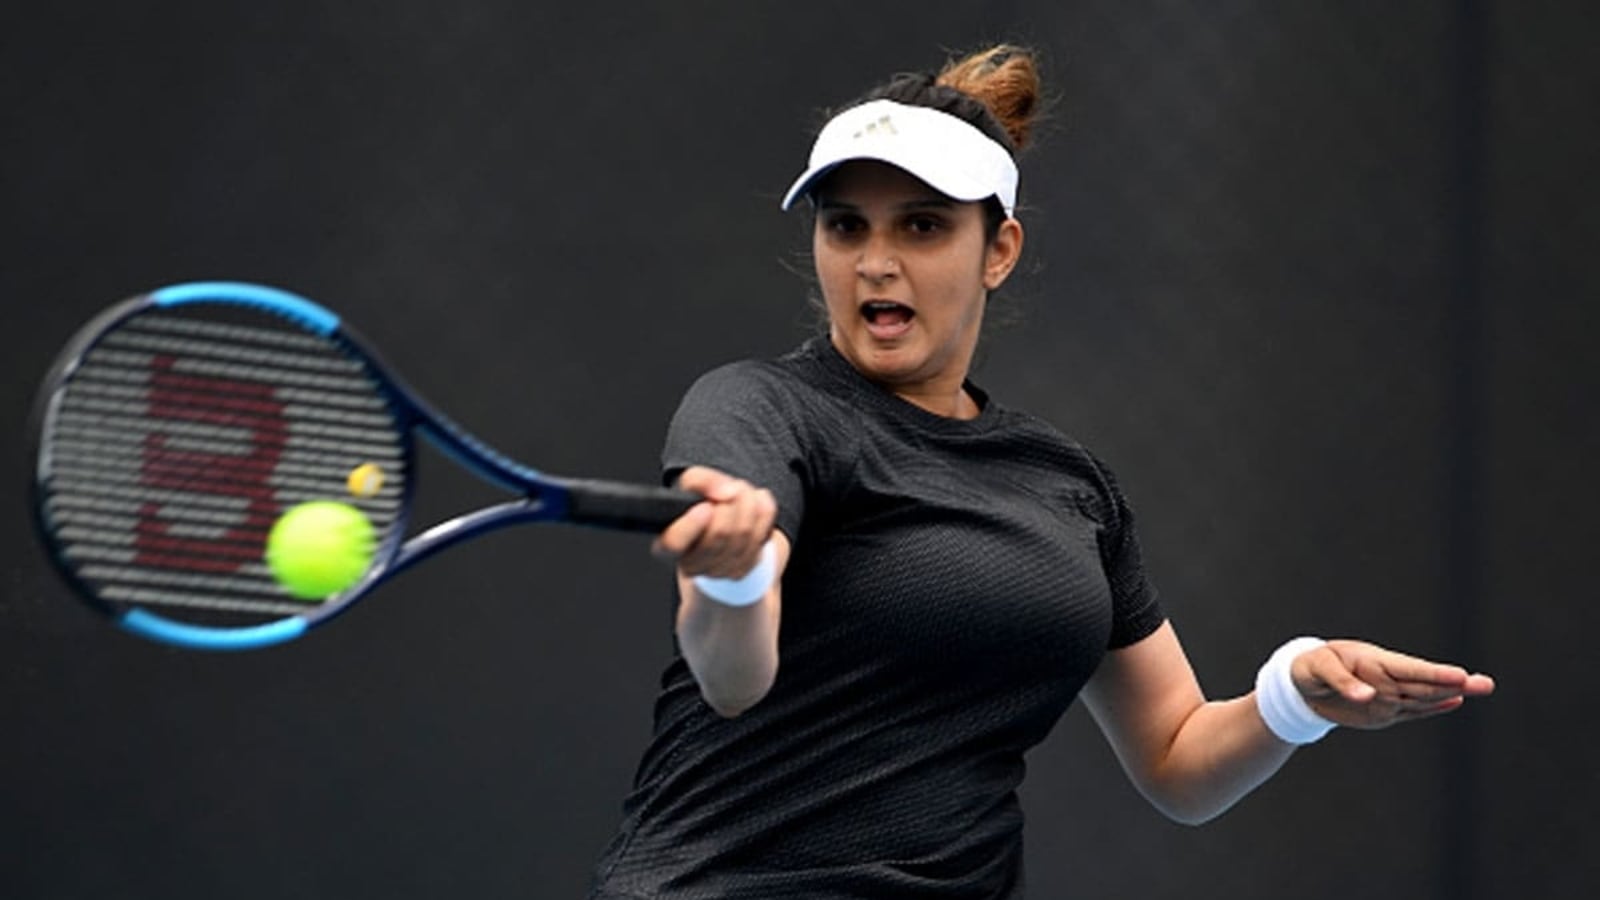 Tennis Player Sania Mirza Sex Videos - Sania Mirza shares heartfelt post ahead of 'last Australian Open' of her  career | Tennis News - Hindustan Times